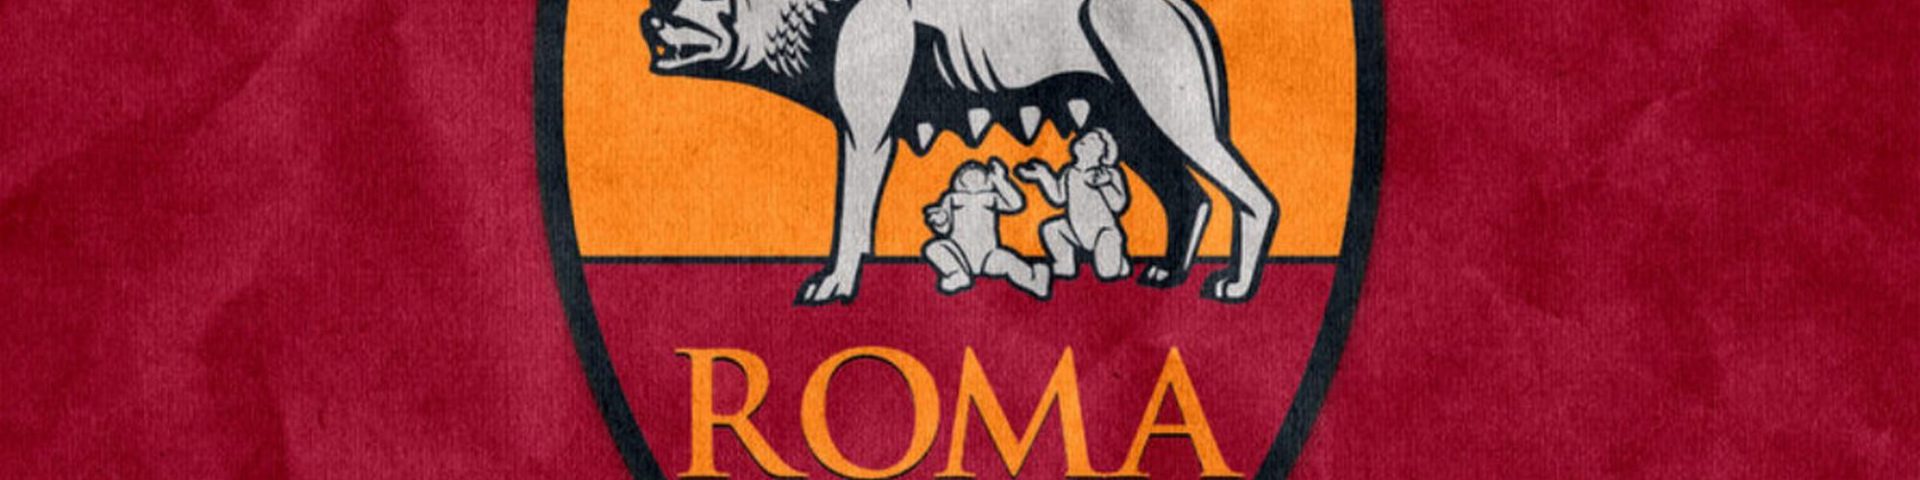 A.S. Roma regala pasta, amuchina, caffè e 5000 biglietti